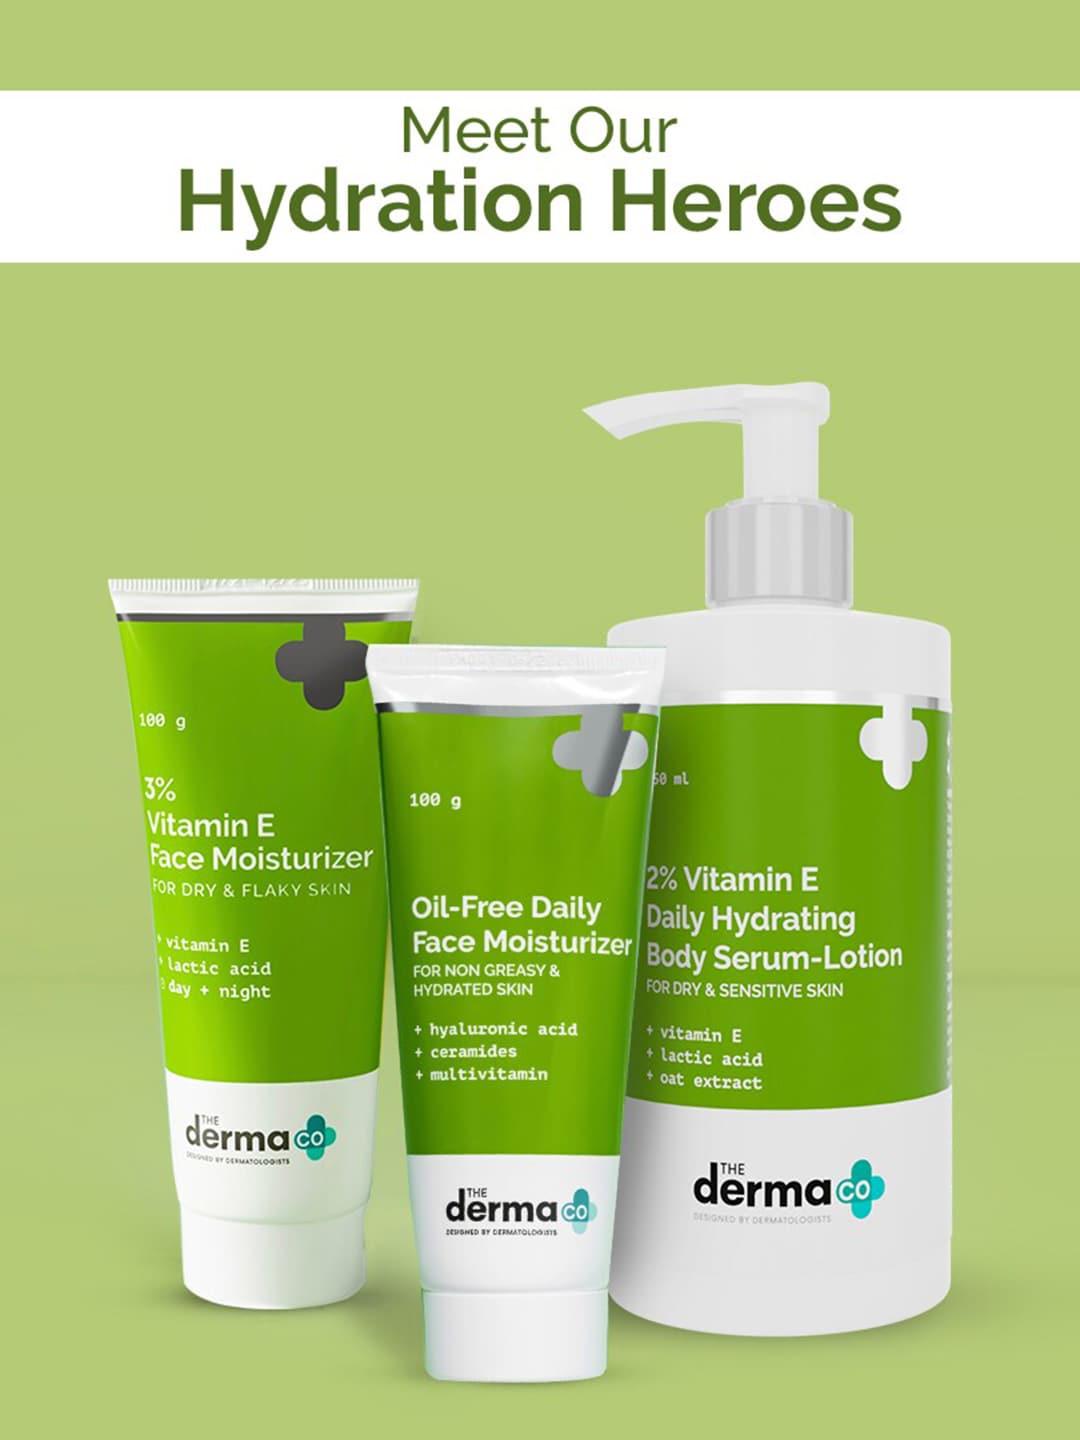 the derma co. 2% vitamin e daily hydrating body serum-lotion 250 ml